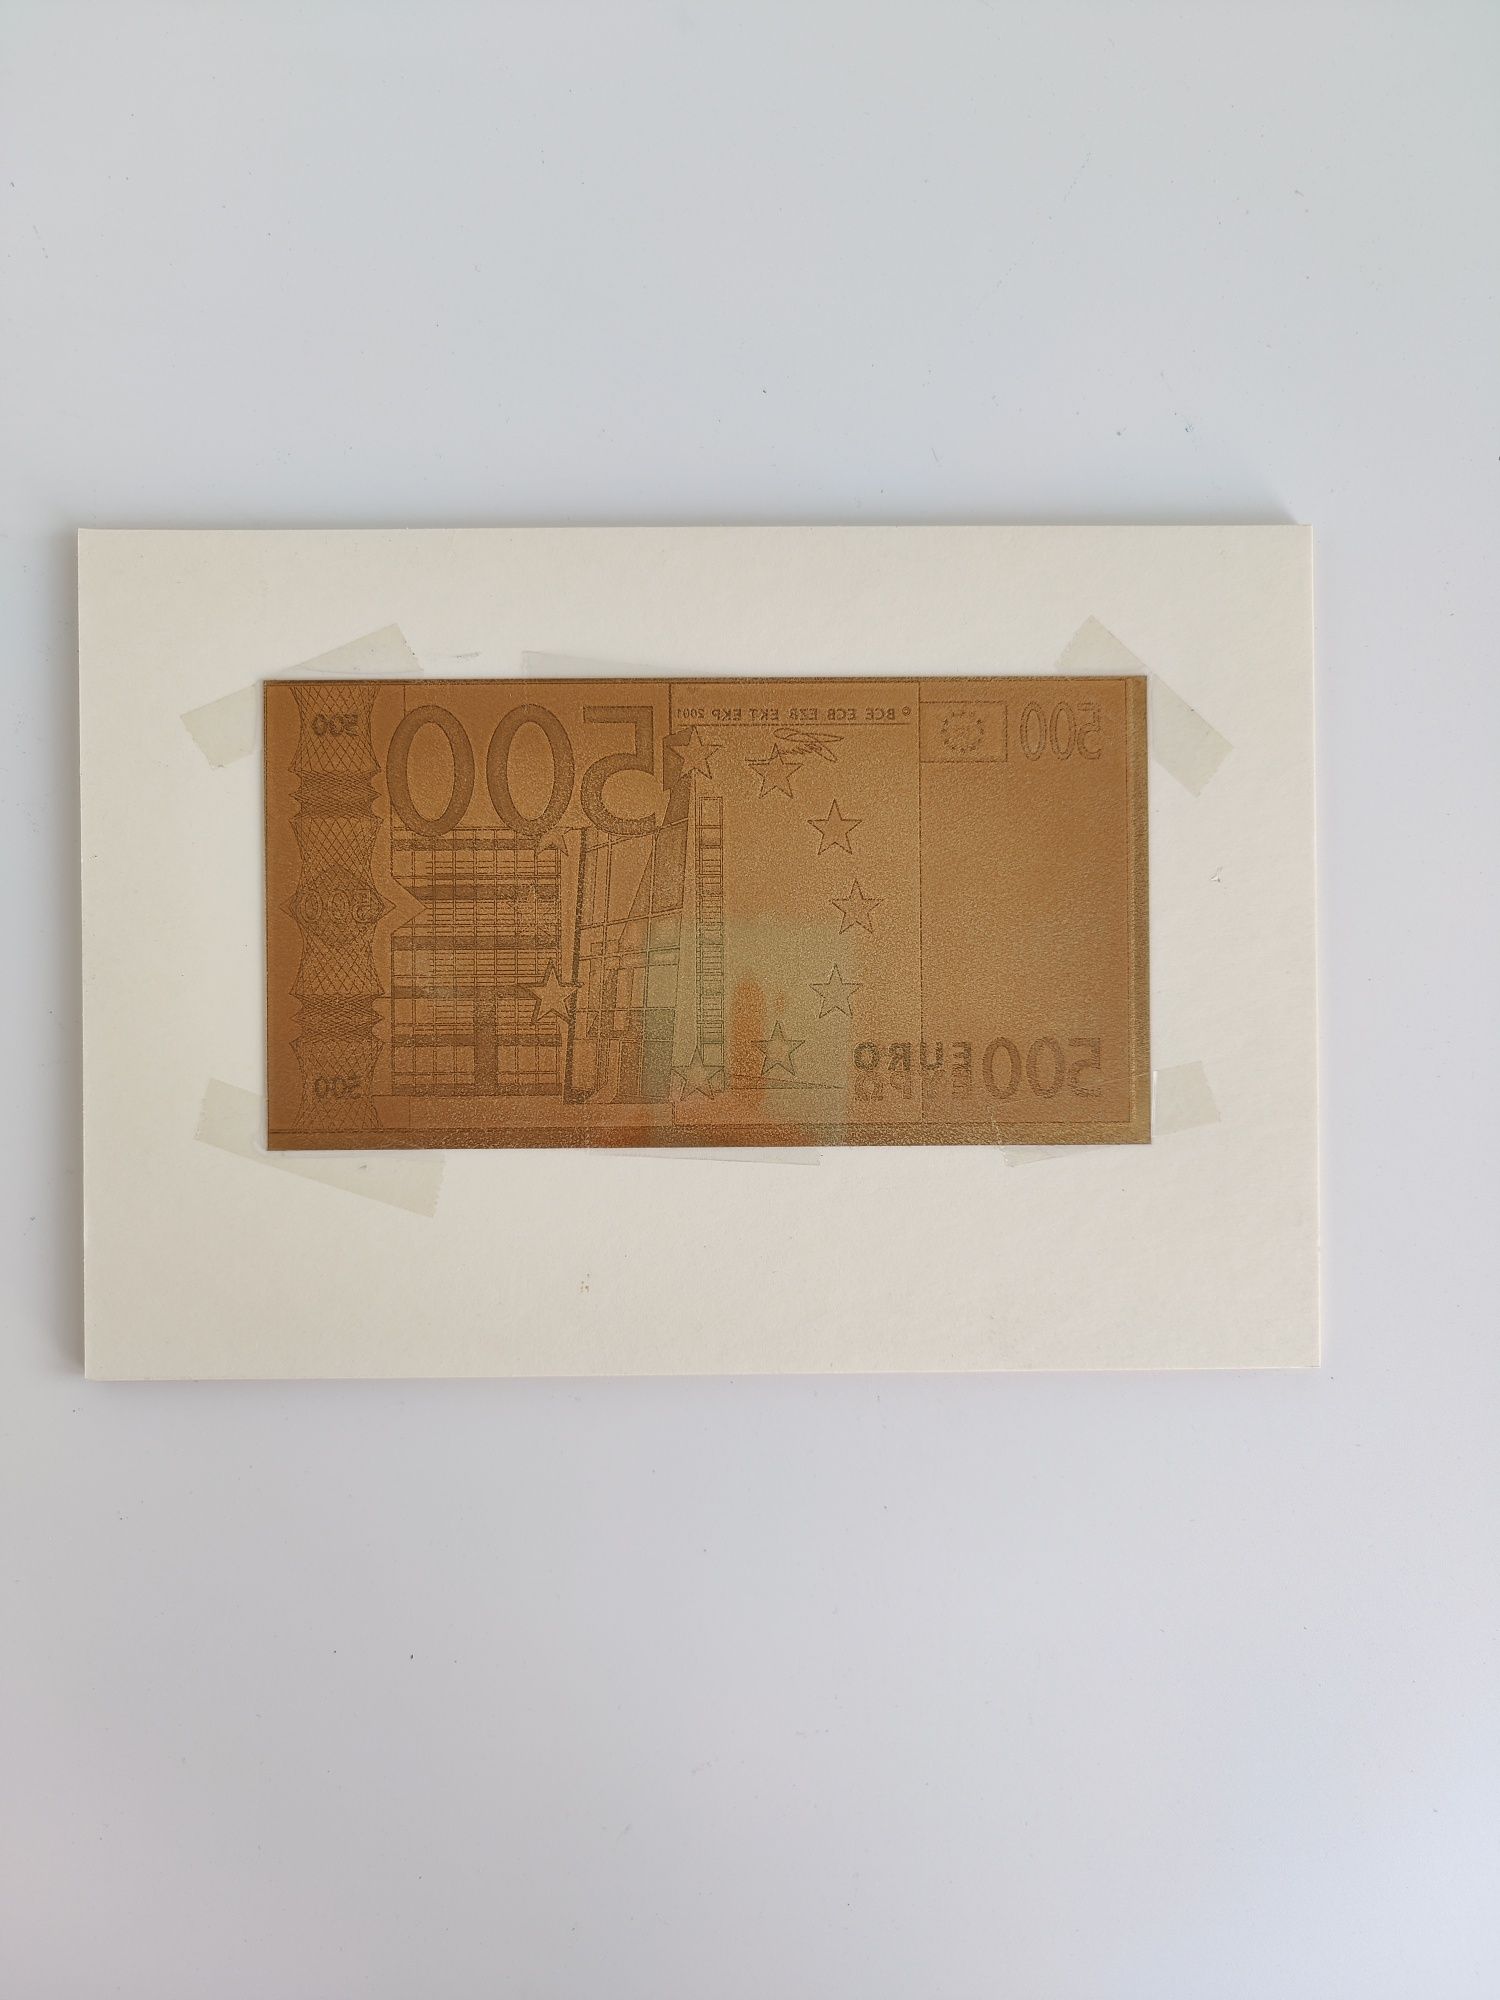 Позолочена колекційна банкнота 500 евро